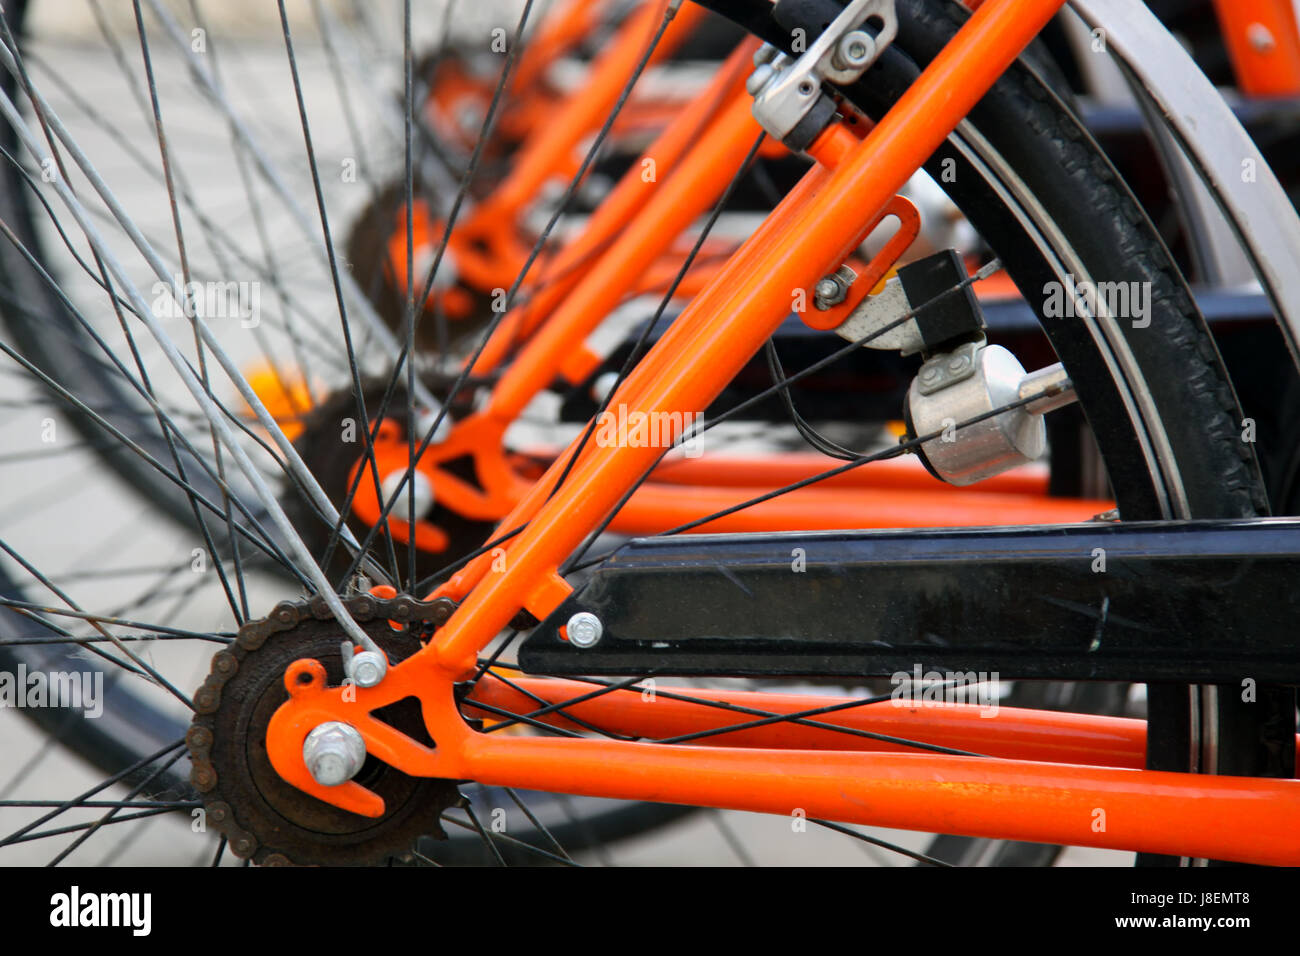 generator, orange, spokes, bike, bicycle, cycle, wheel, chain, wheels, traffic, Stock Photo